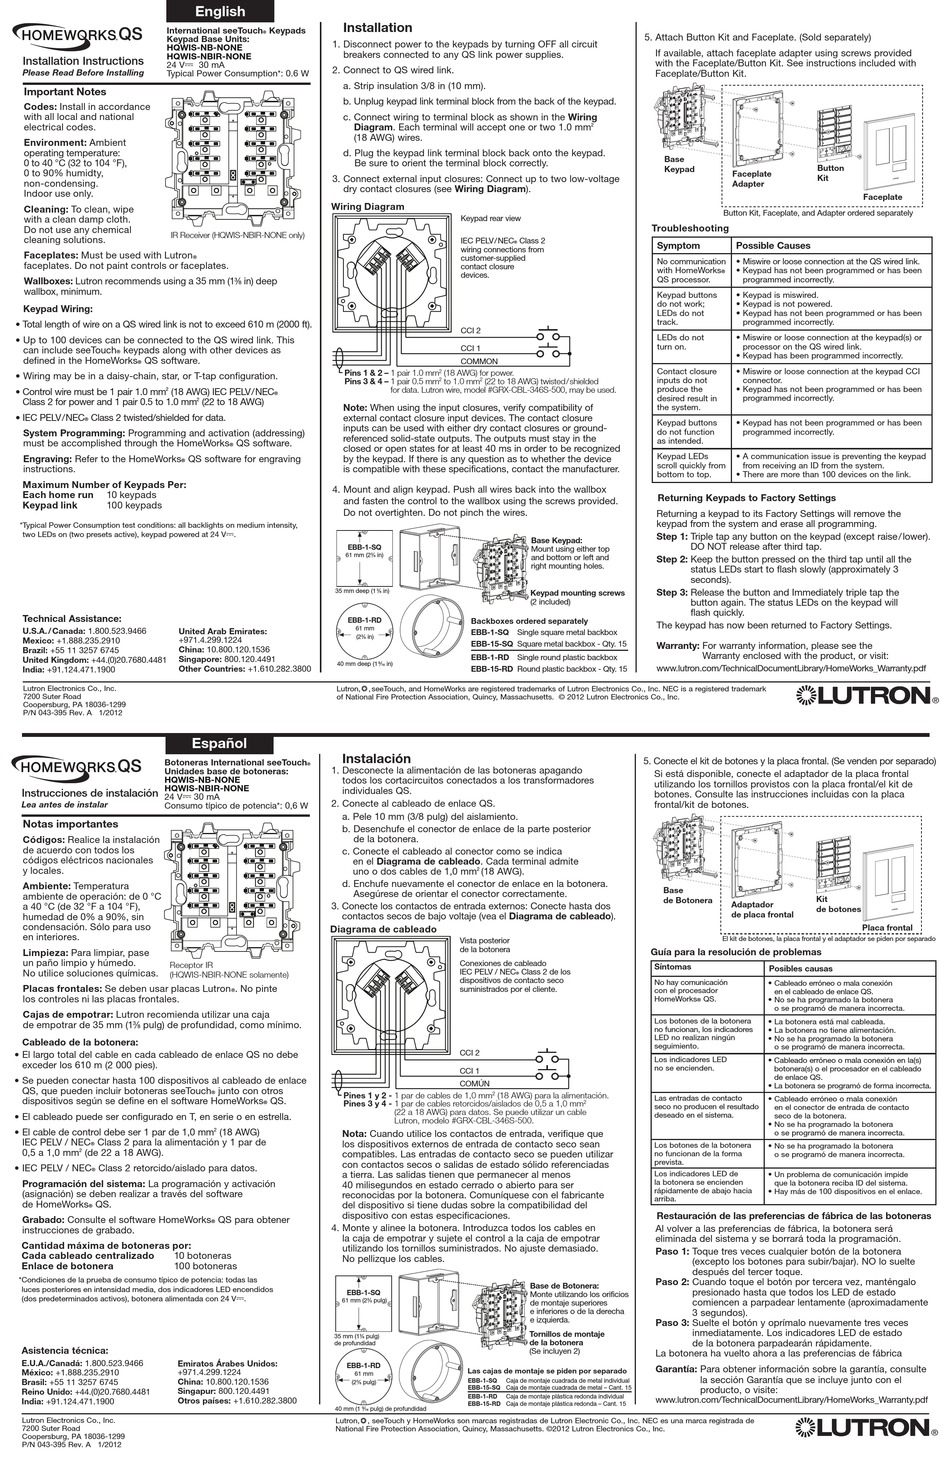 lutron homeworks qs pdf